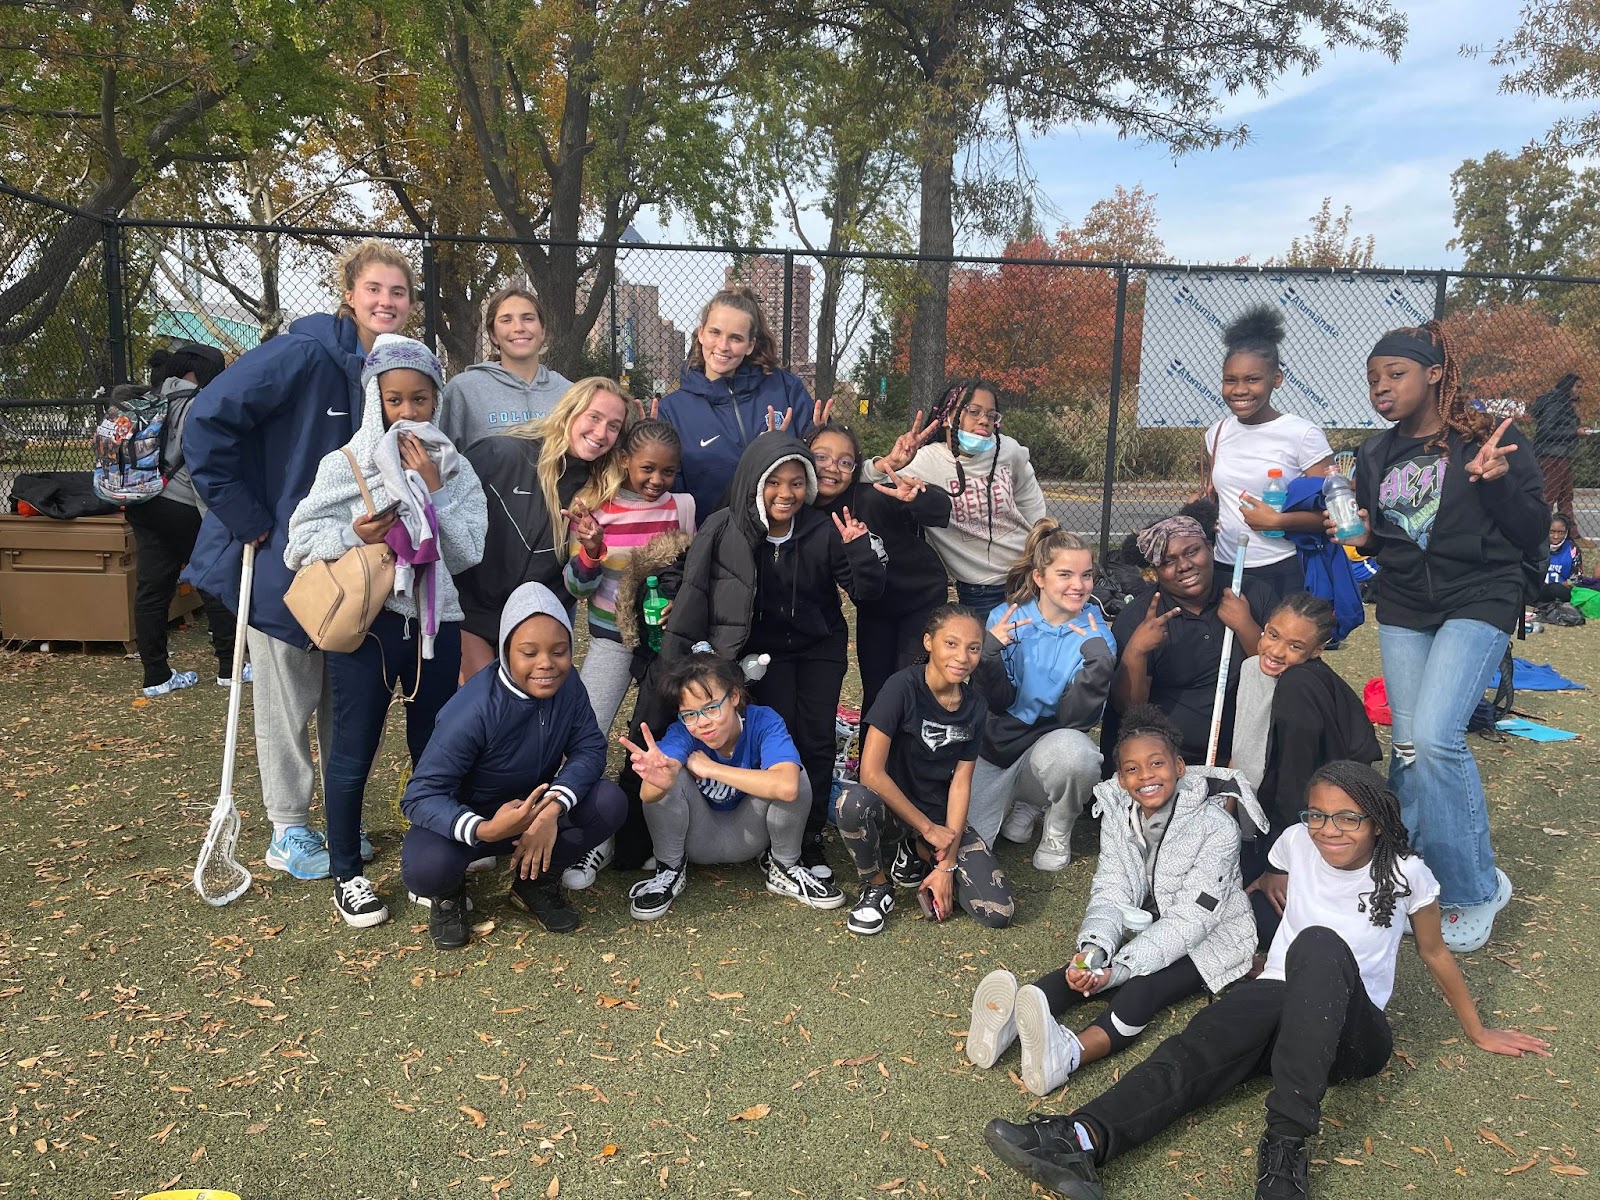 Corrigan (center), members of the Columbia lacrosse team, the Harlem-based middle school girl's lacrosse team.